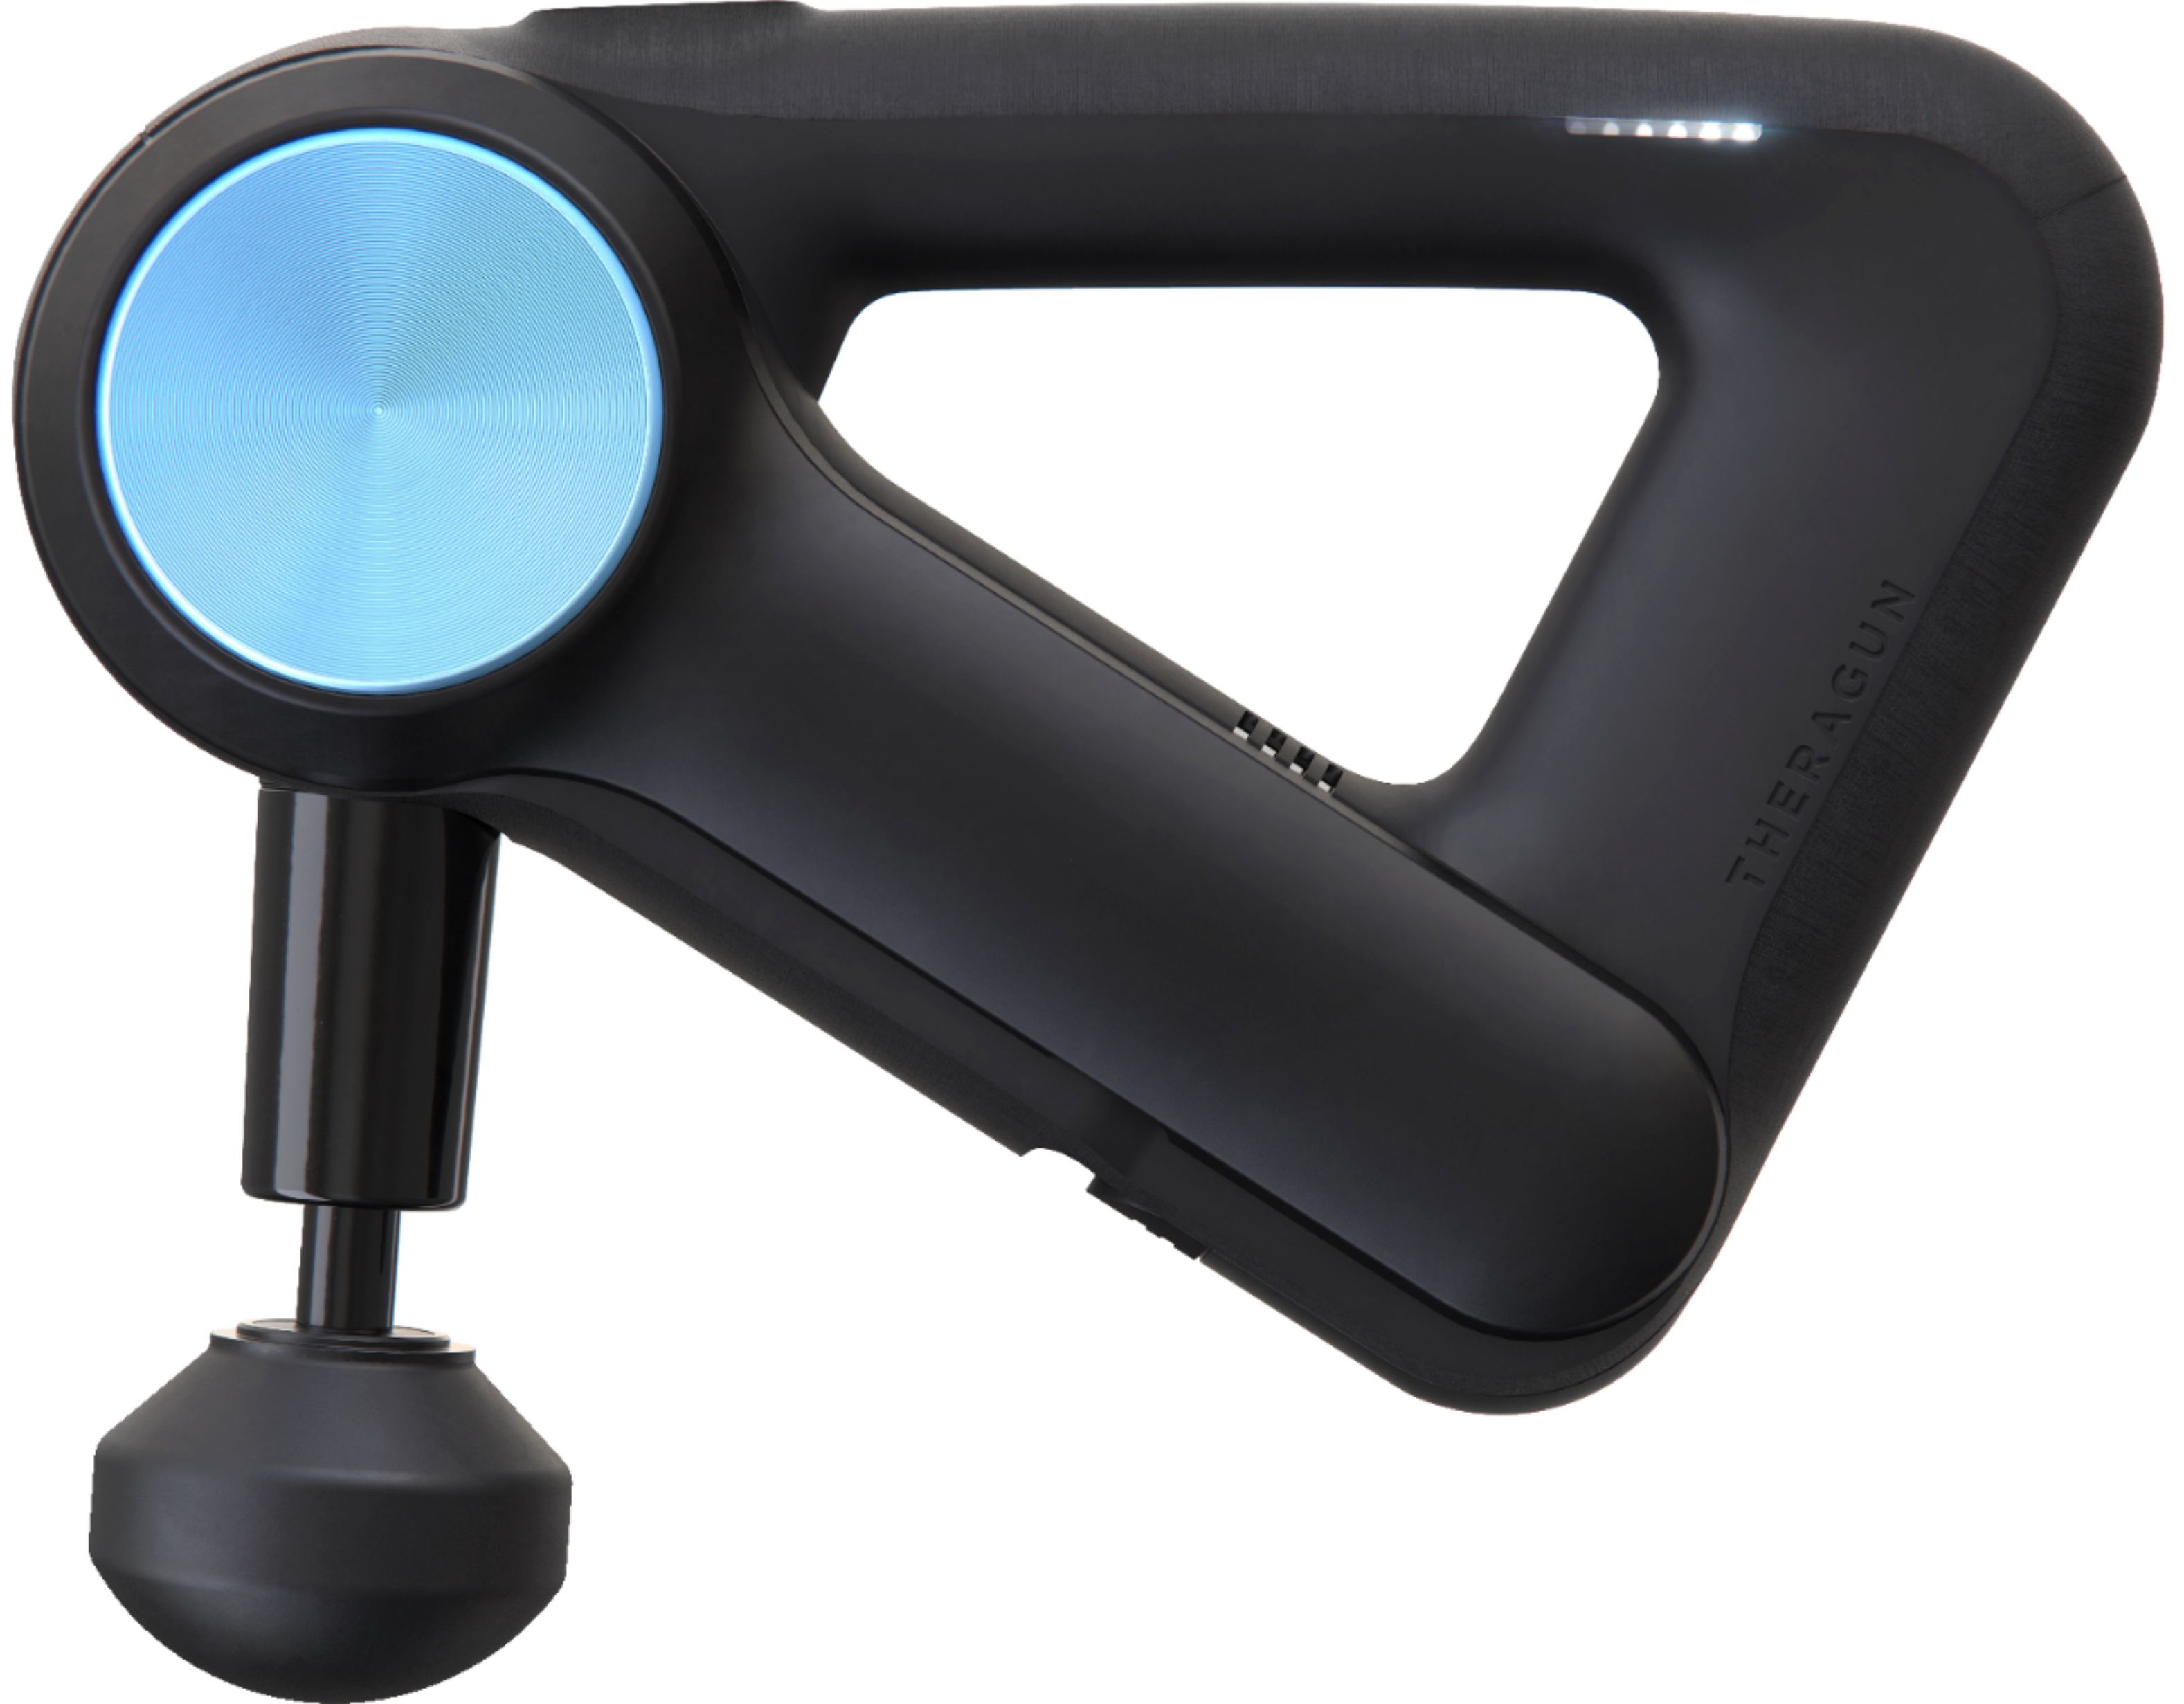 Theragun G3pro Professional Handheld Percussive Massage Gun With Travel Case Black G3pro Pkg Us Best Buy